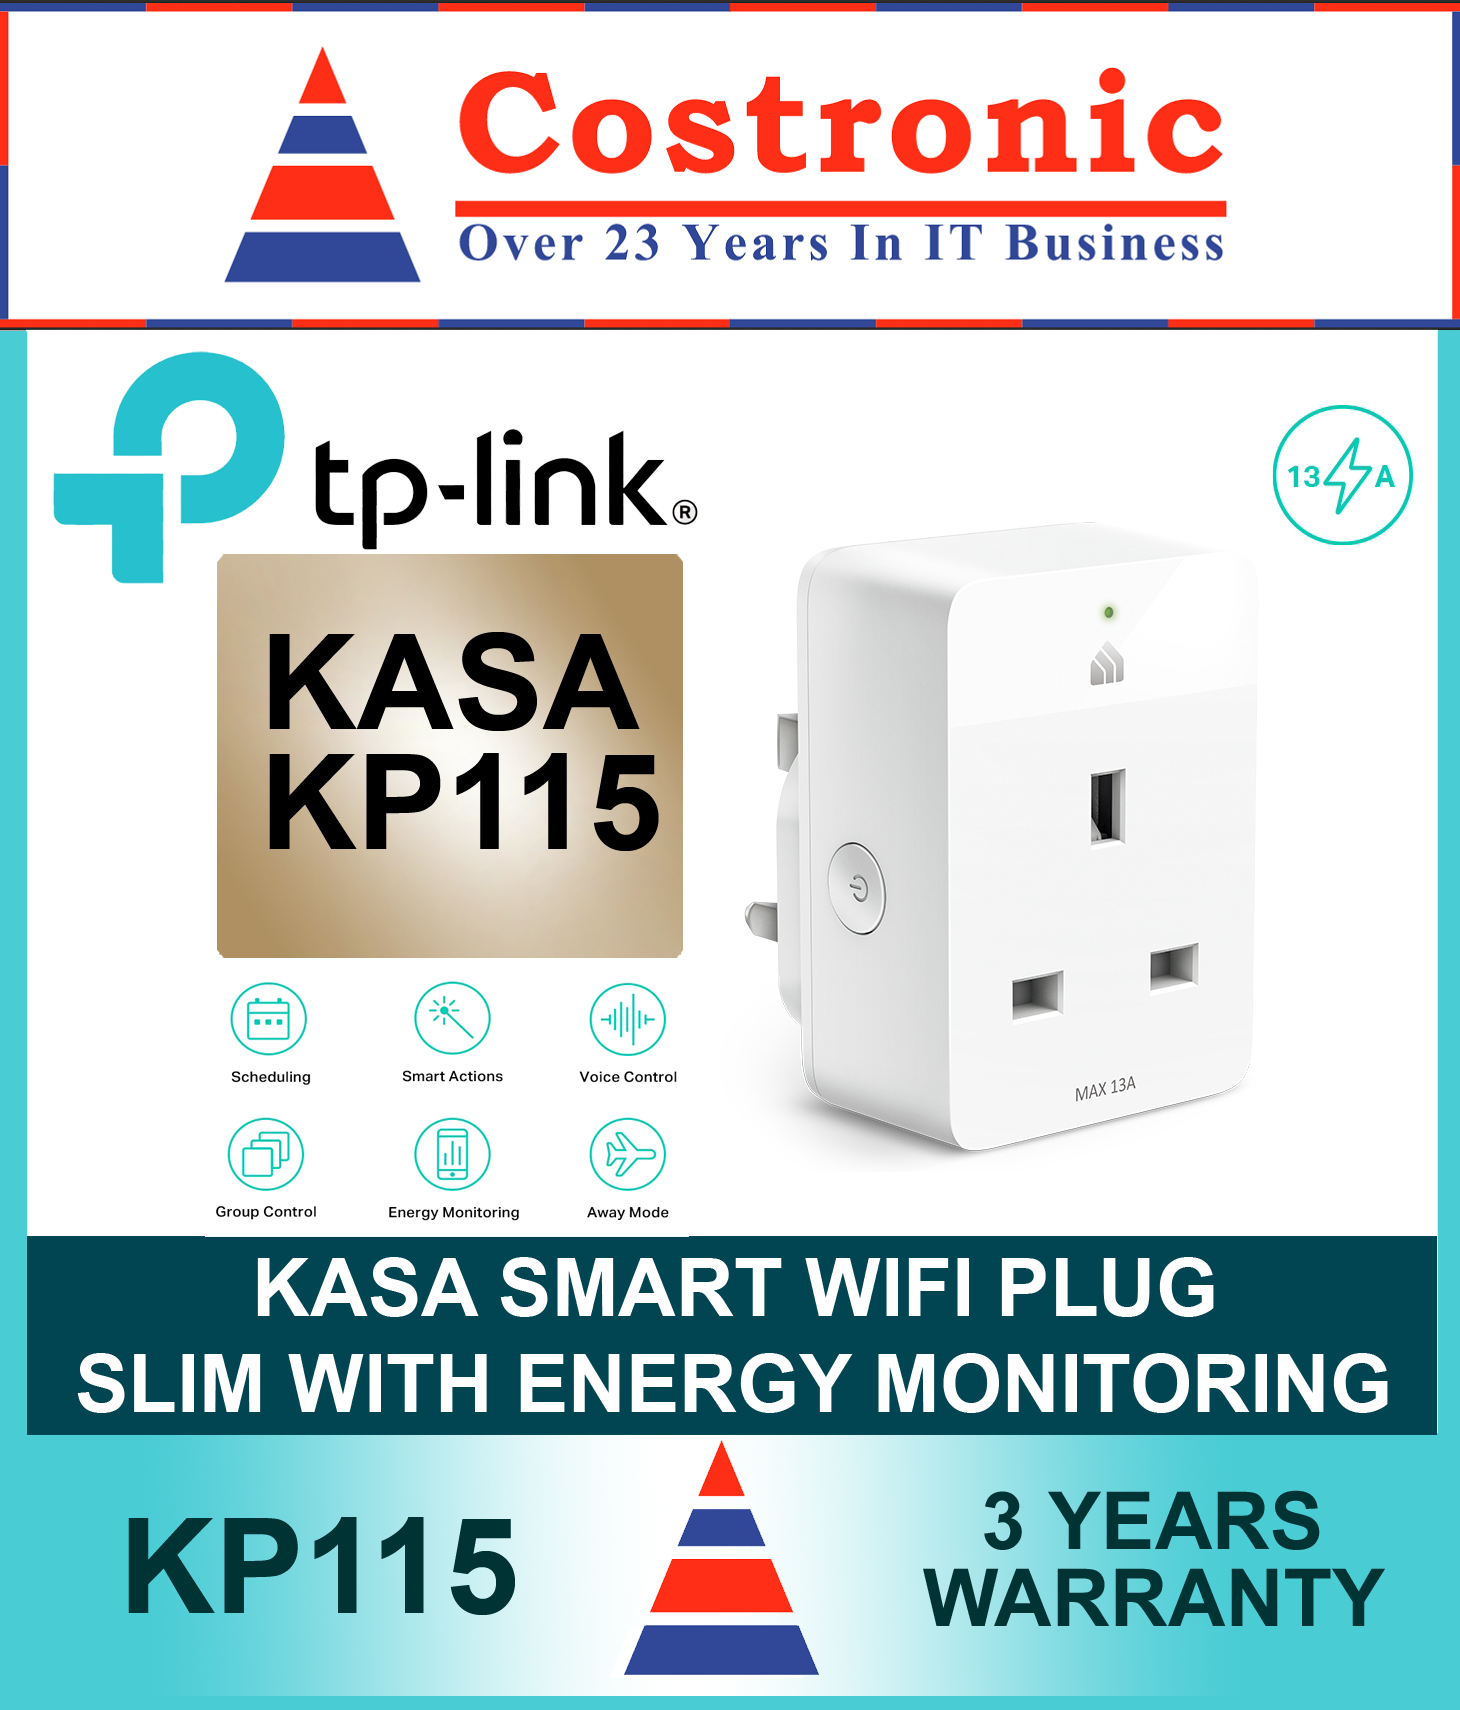 TP-Link KP115 Kasa Smart WiFi Plug Slim